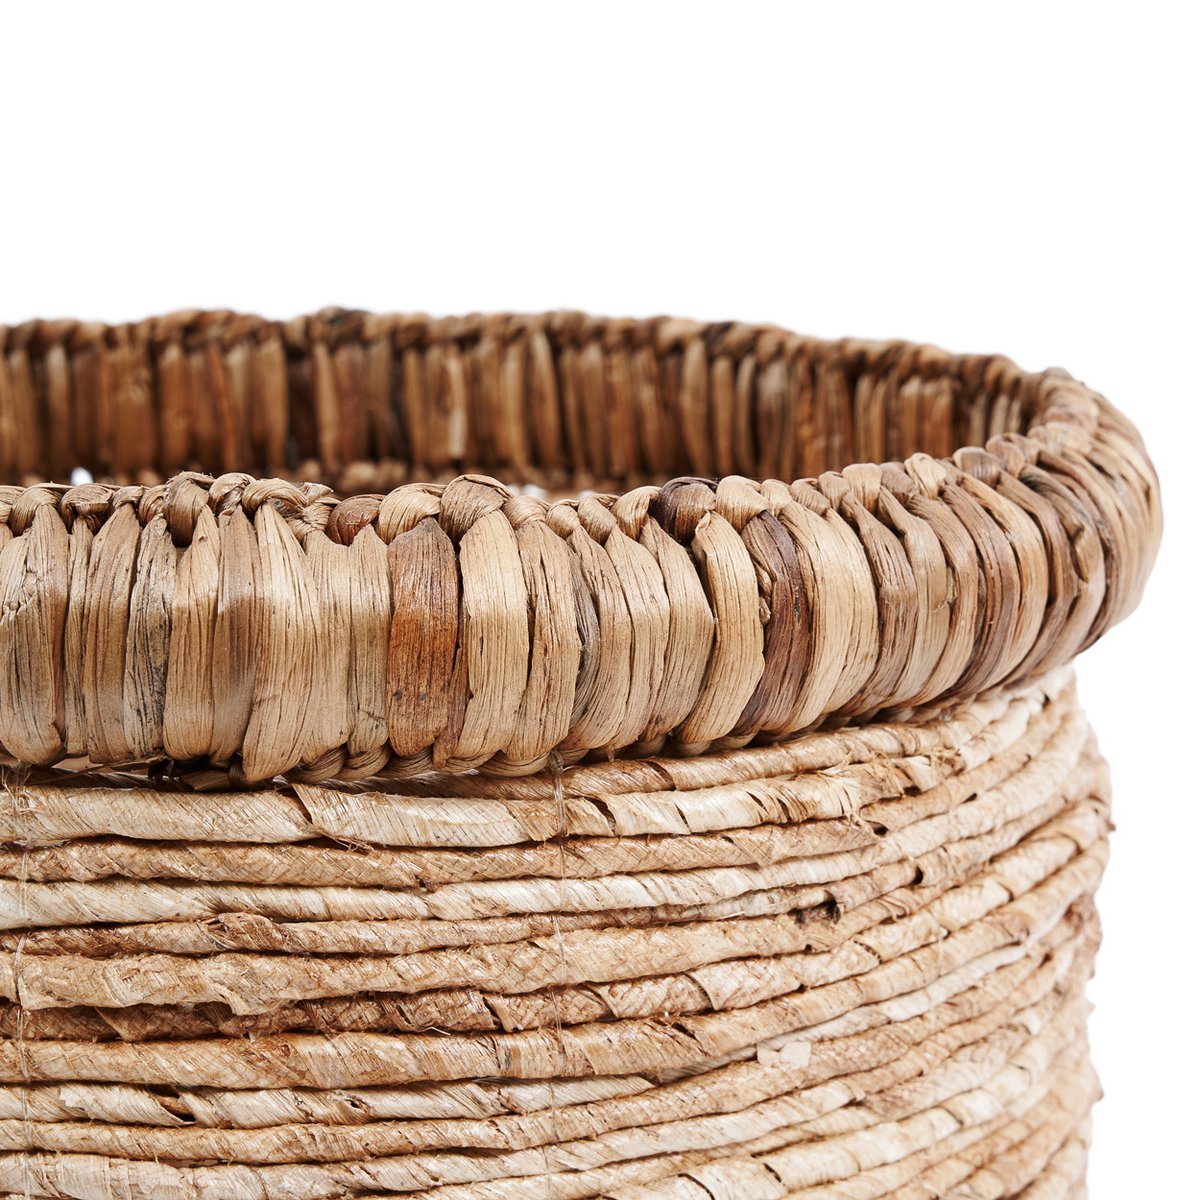 The Chuka basket